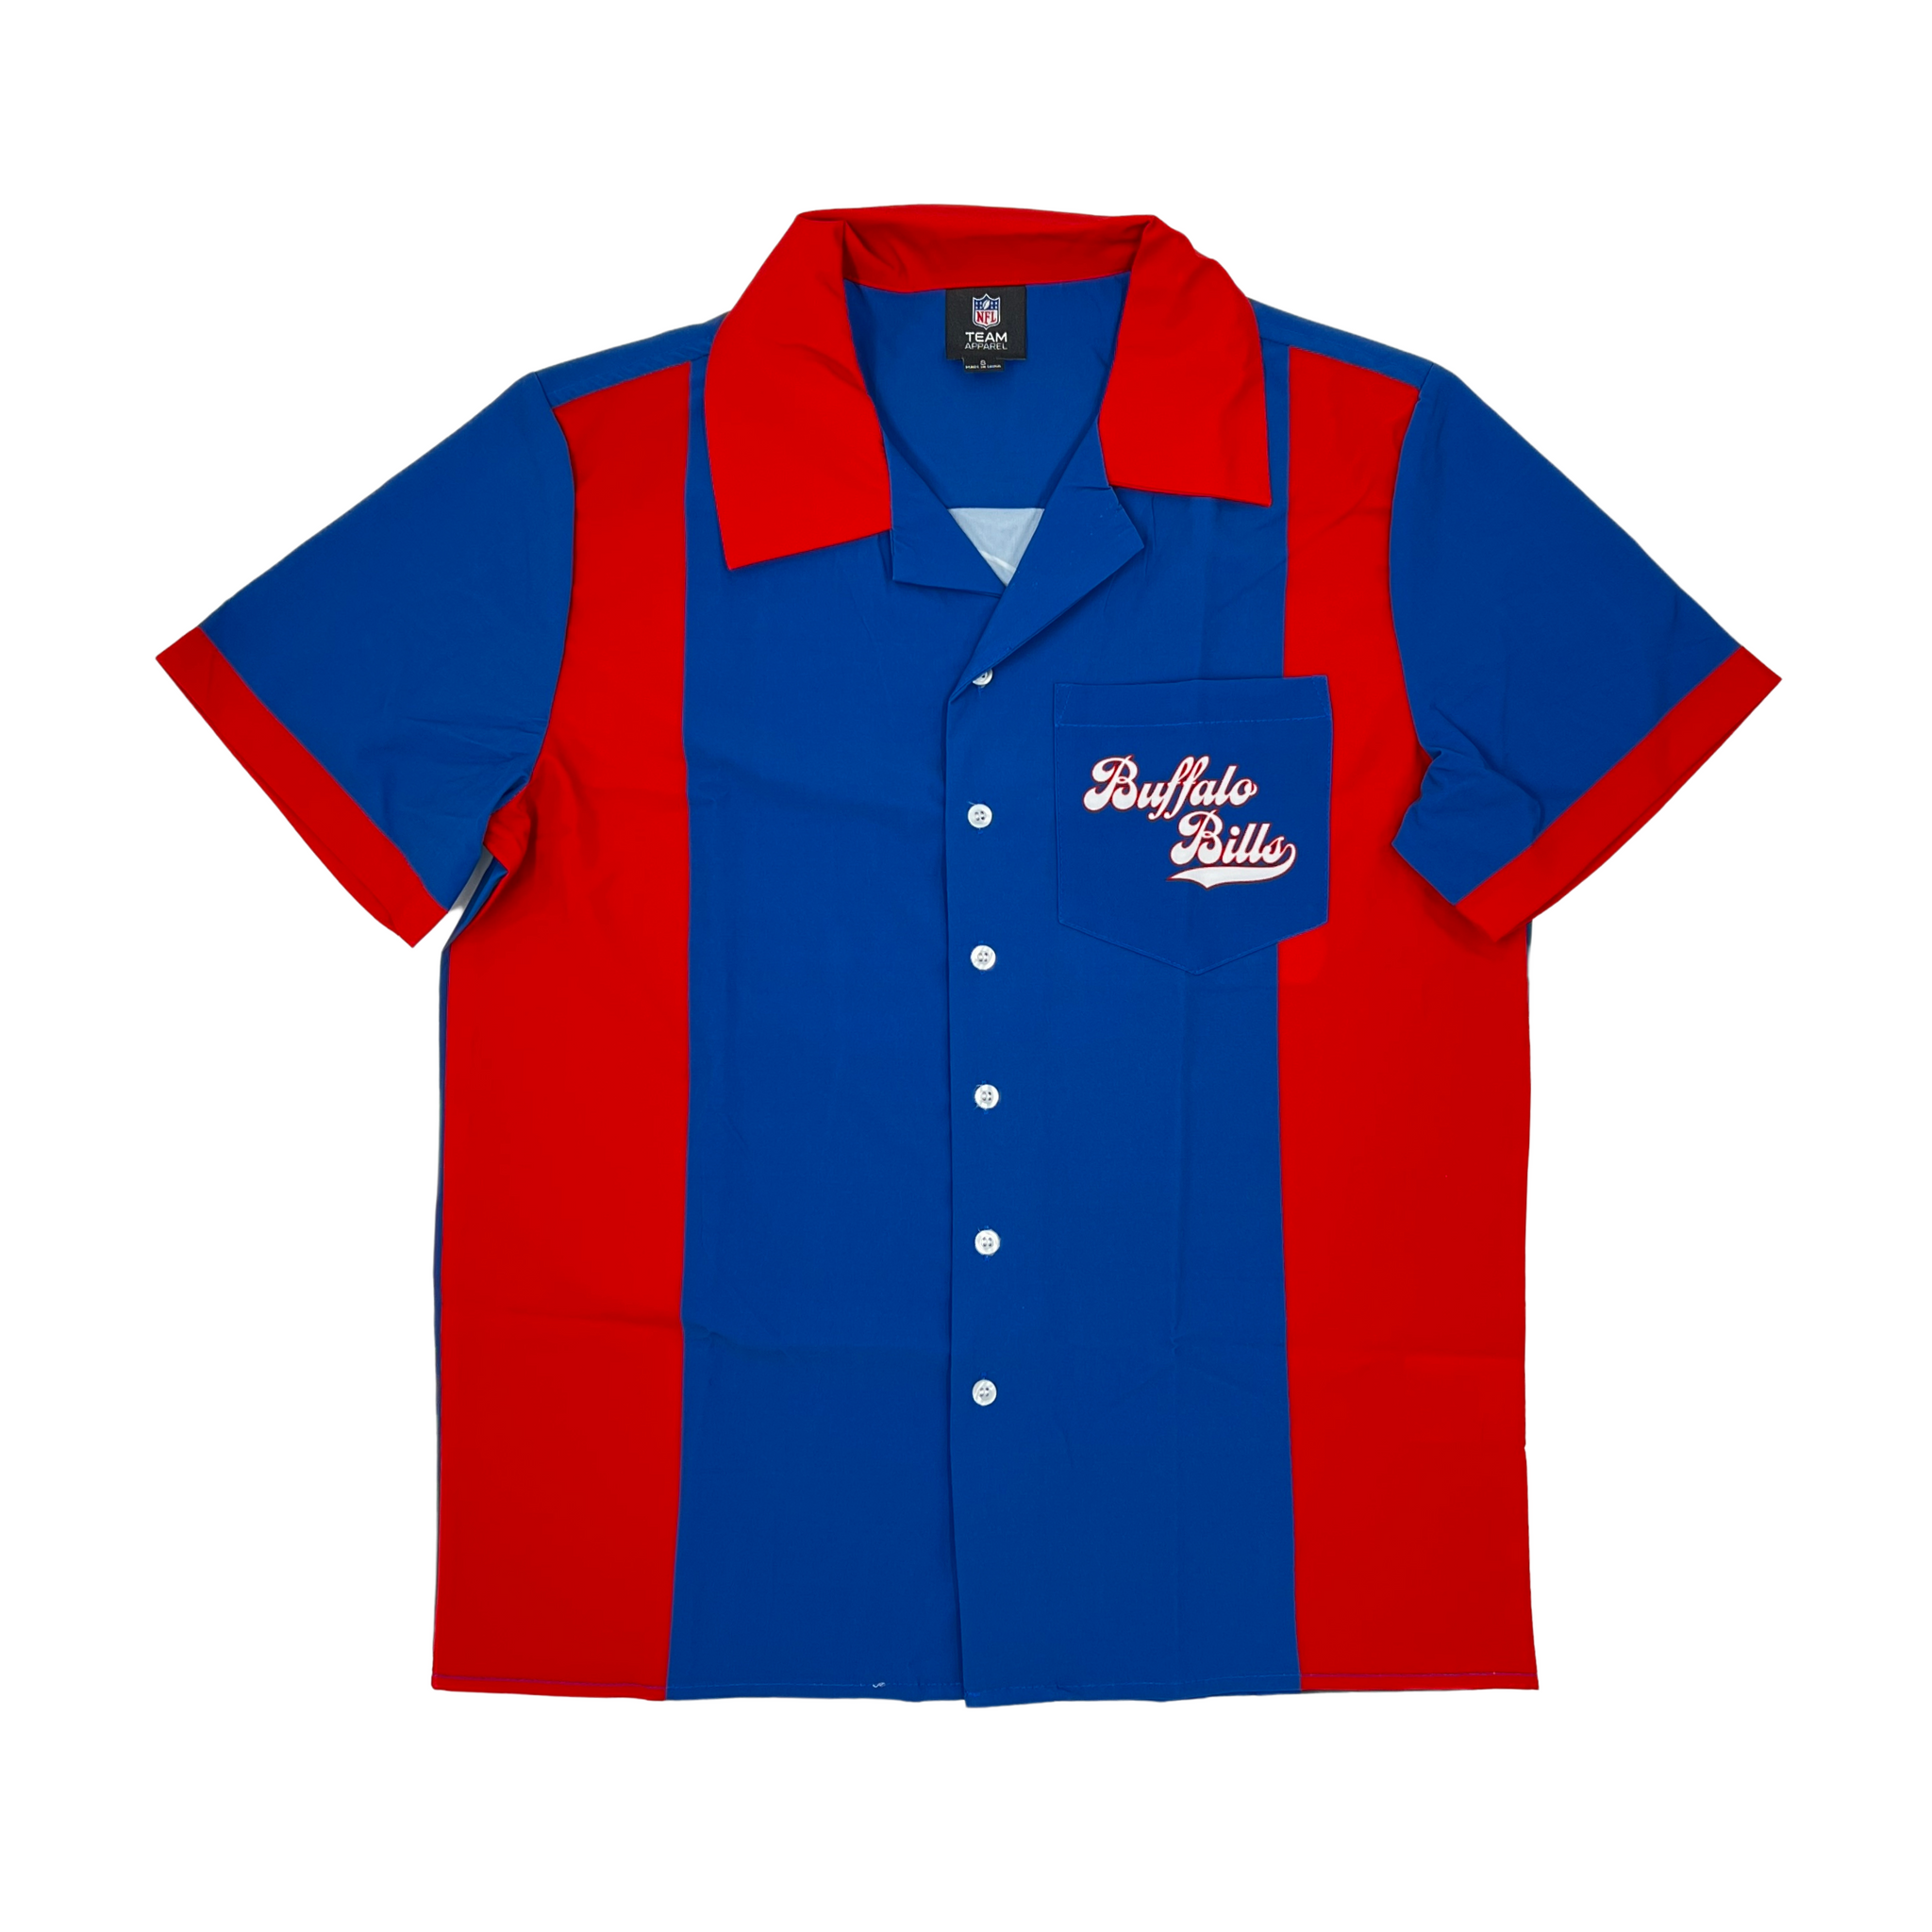 Buffalo Bills Mafia Royal & Red Bowling Shirt